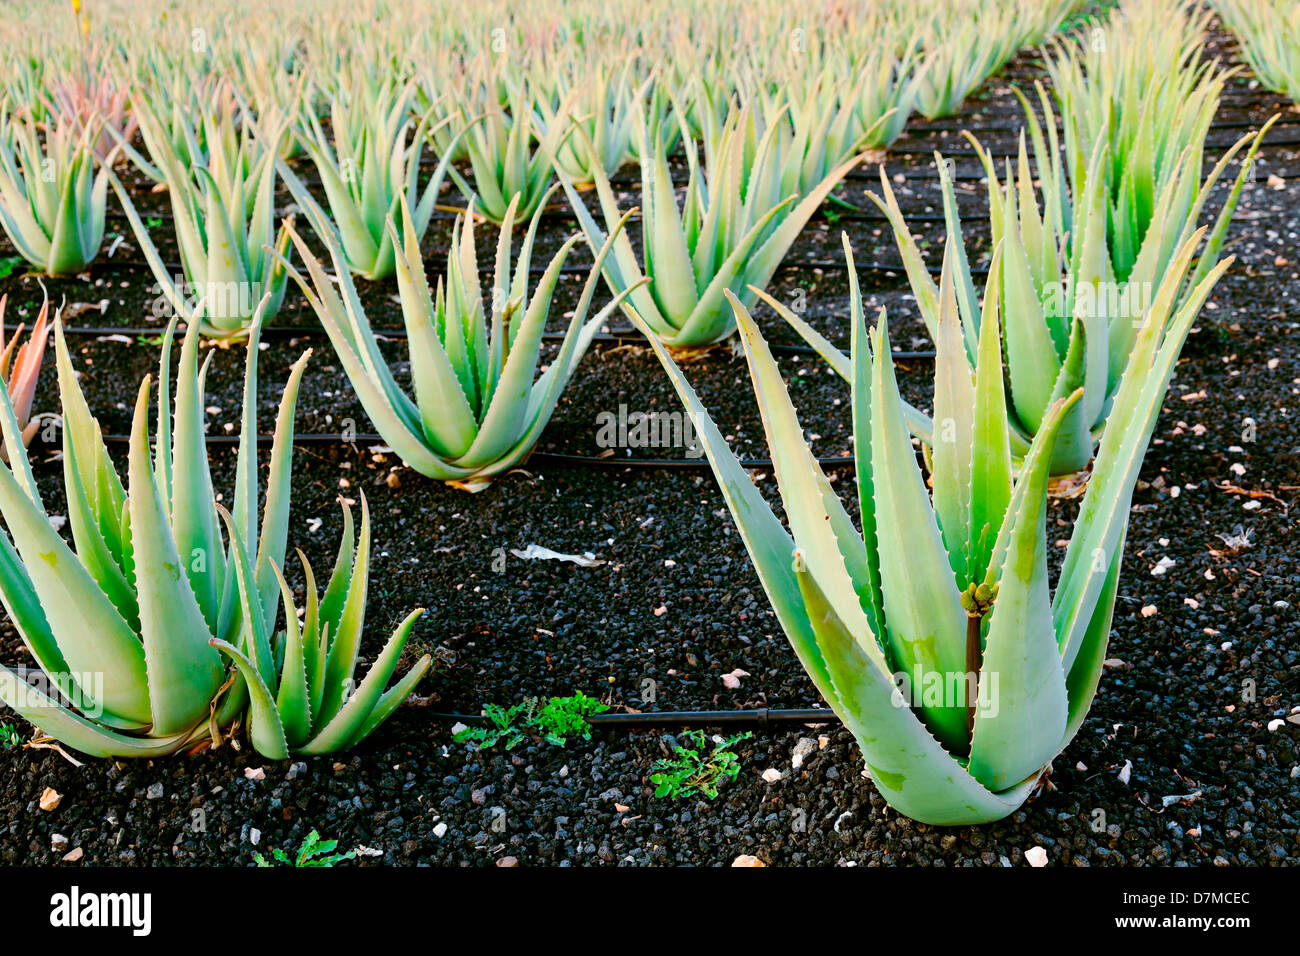 Granja de Aloe vera Fotografía de stock - Alamy